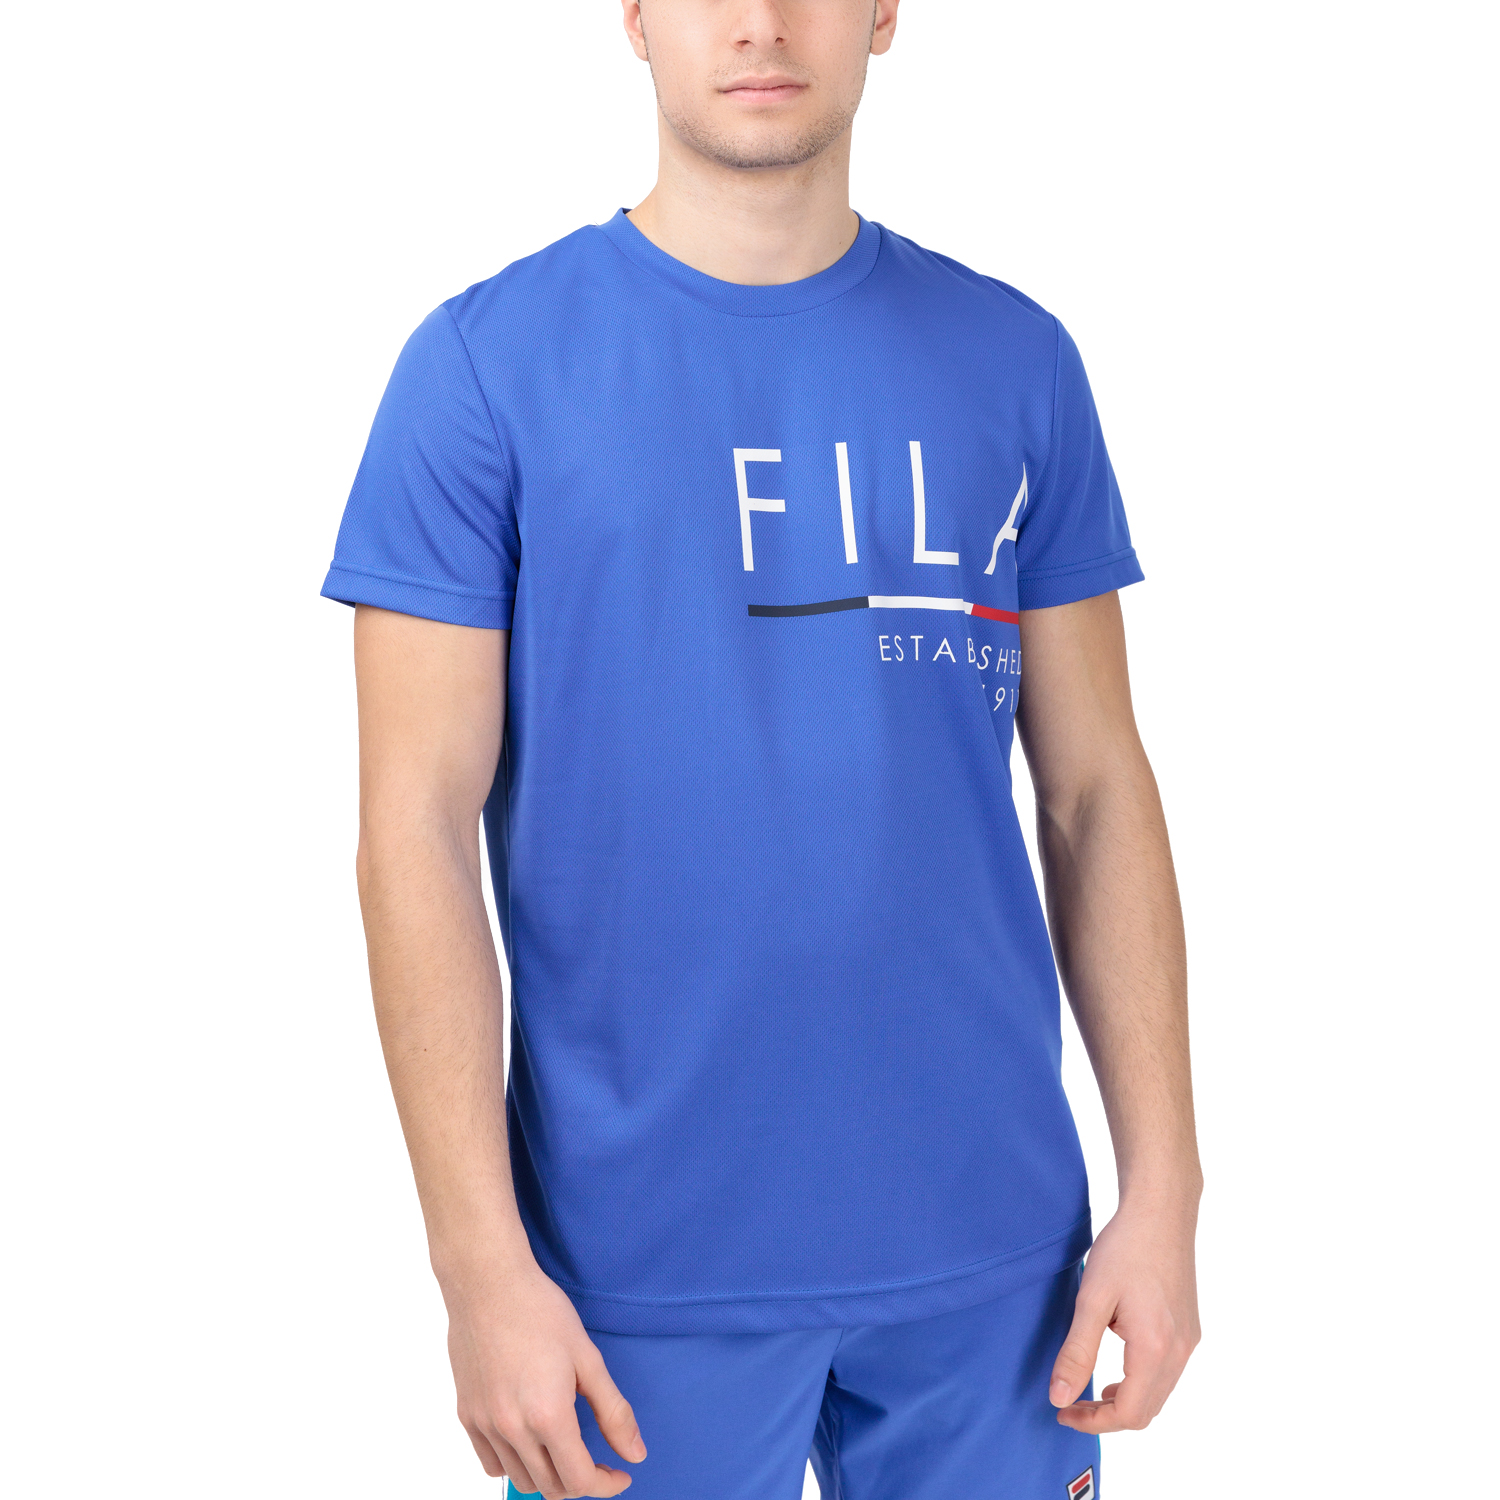 Fila Maxim Camiseta - Dazzling Blue